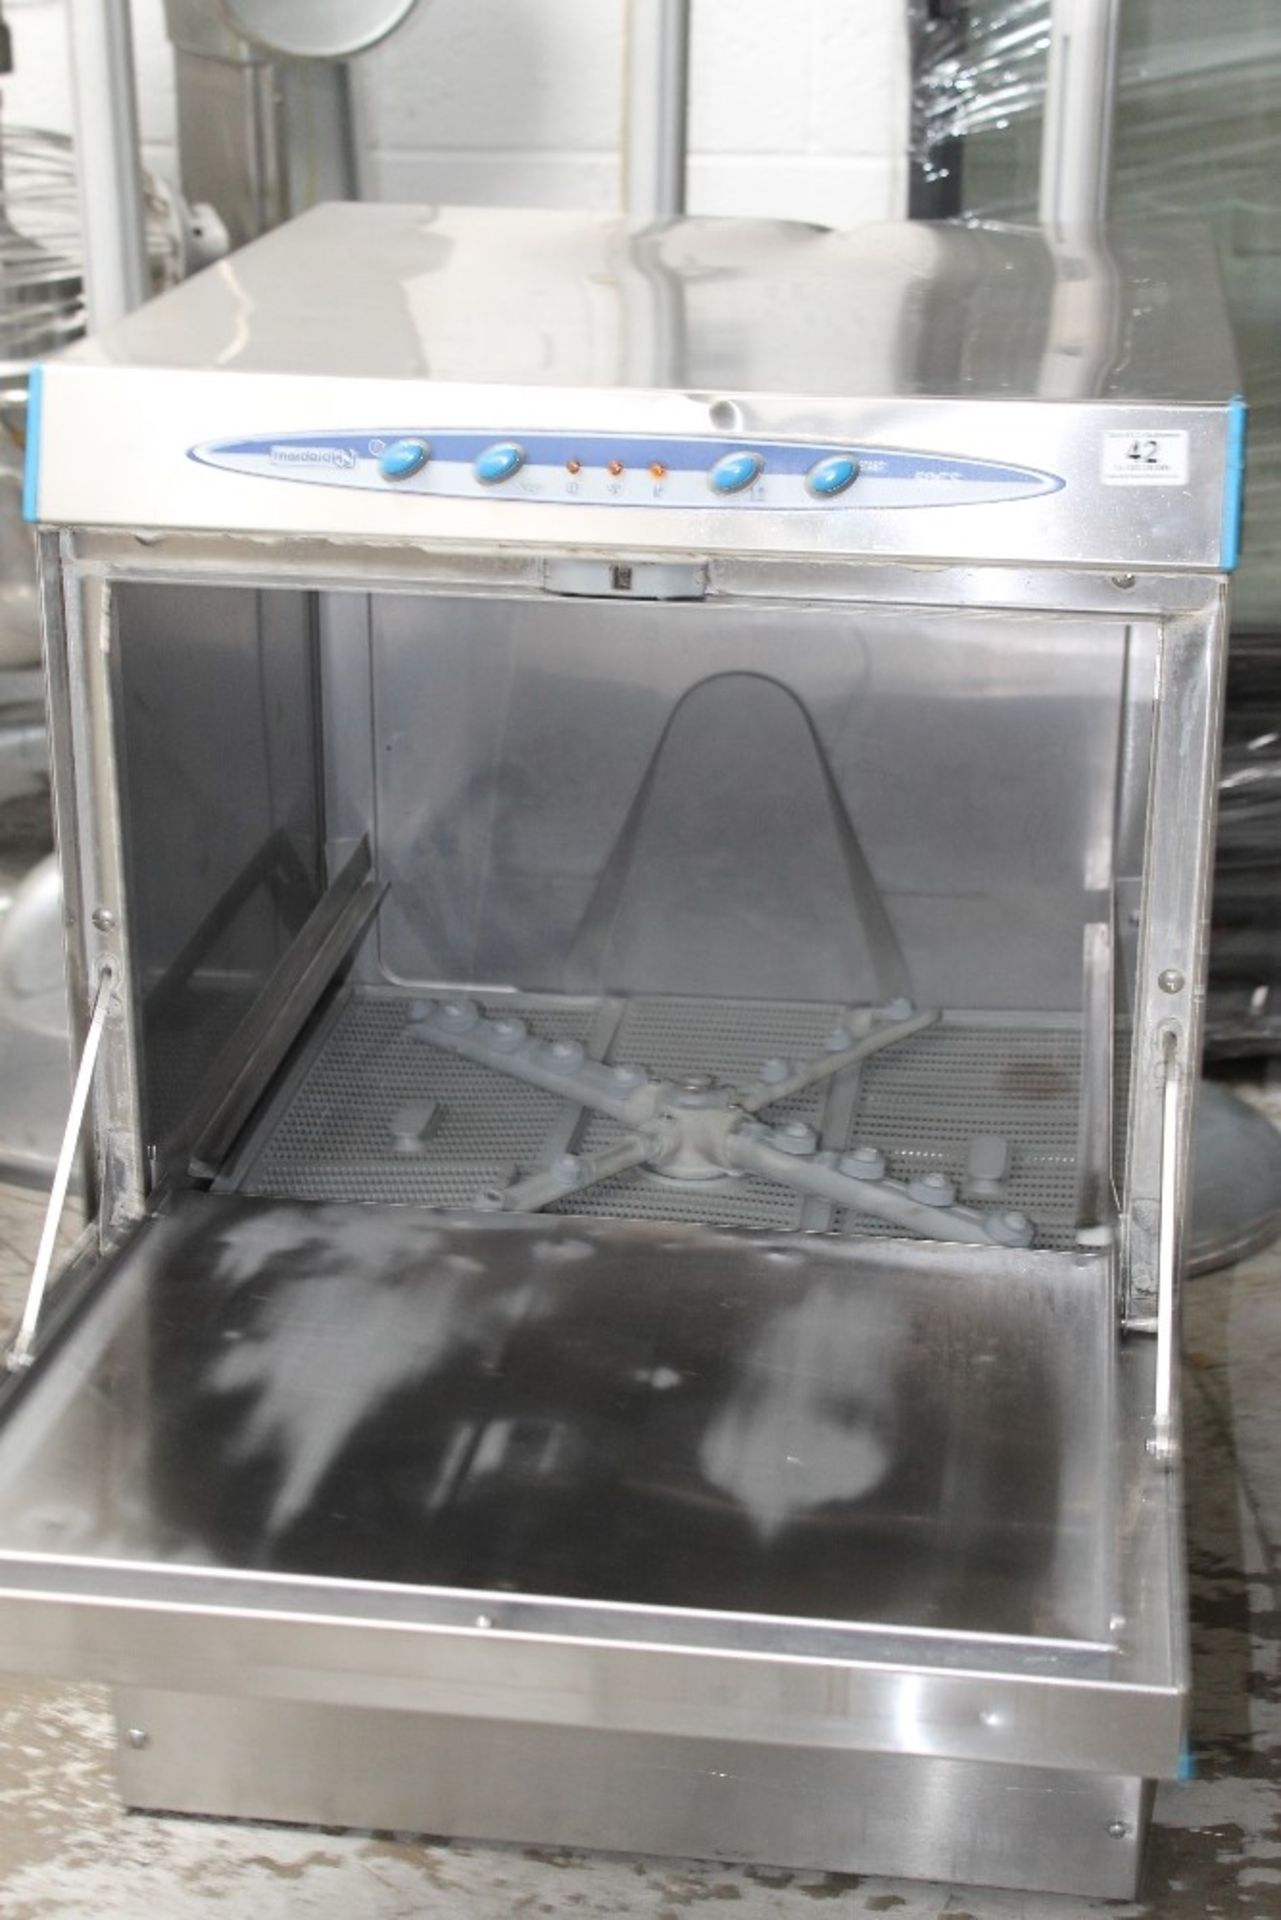 Maidaid Dishwasher – Tested – NO VAT – Model OGSDP915865 - Image 3 of 3